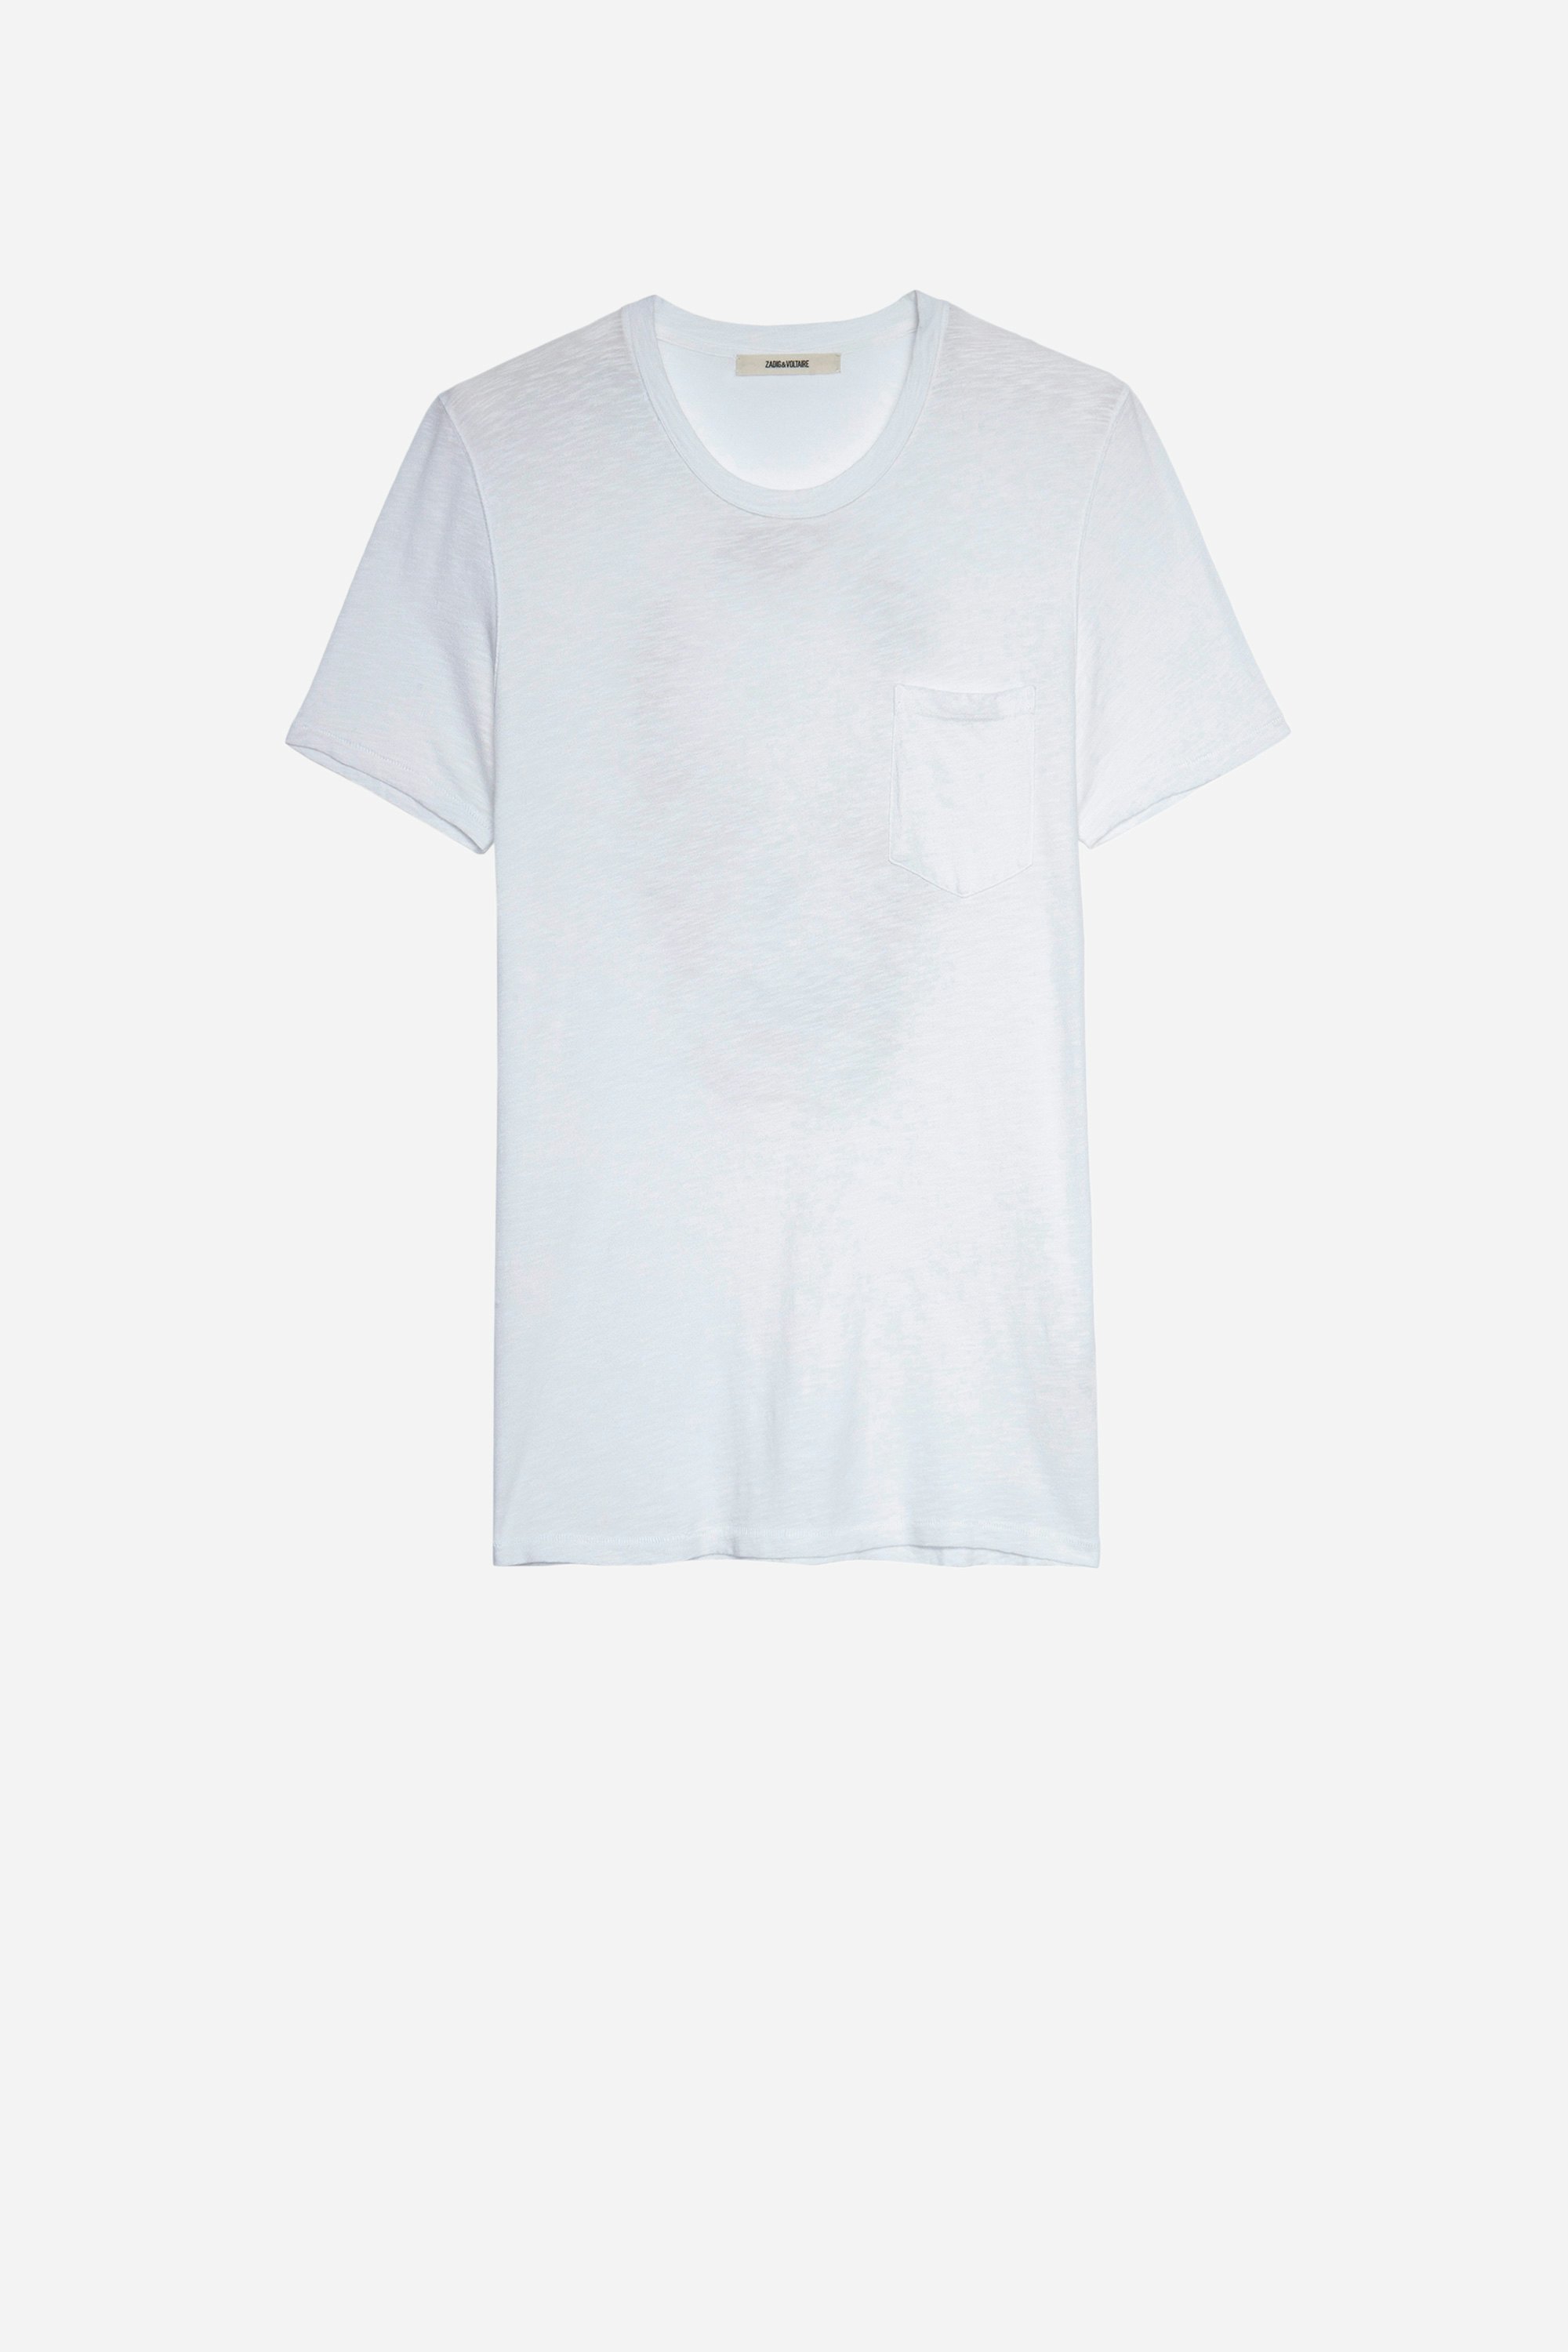 T-shirt Stockholm - T-shirt blanc homme